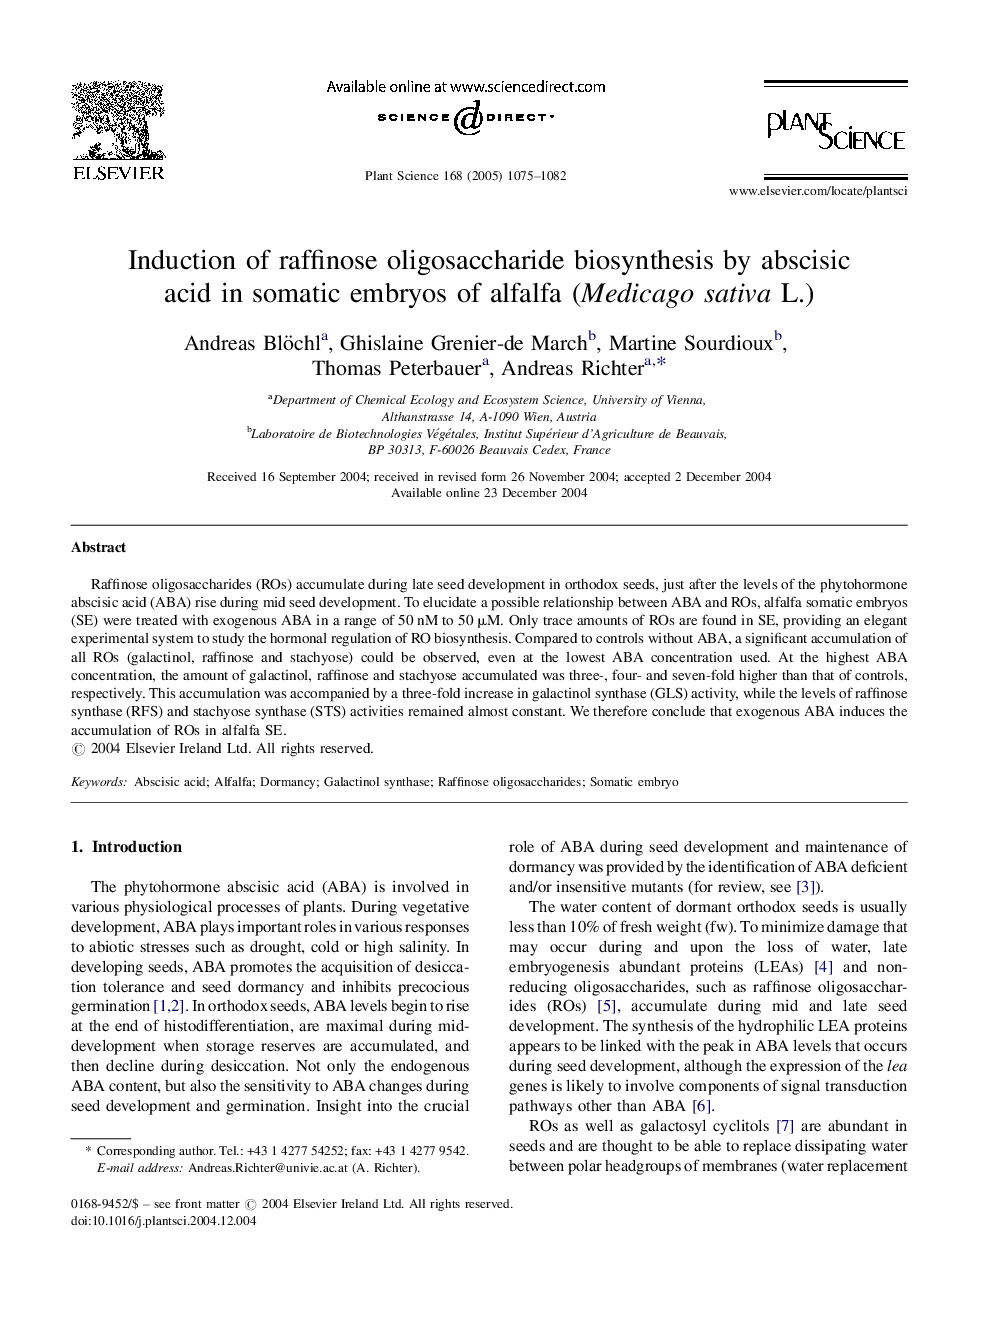 Induction of raffinose oligosaccharide biosynthesis by abscisic acid in somatic embryos of alfalfa (Medicago sativa L.)